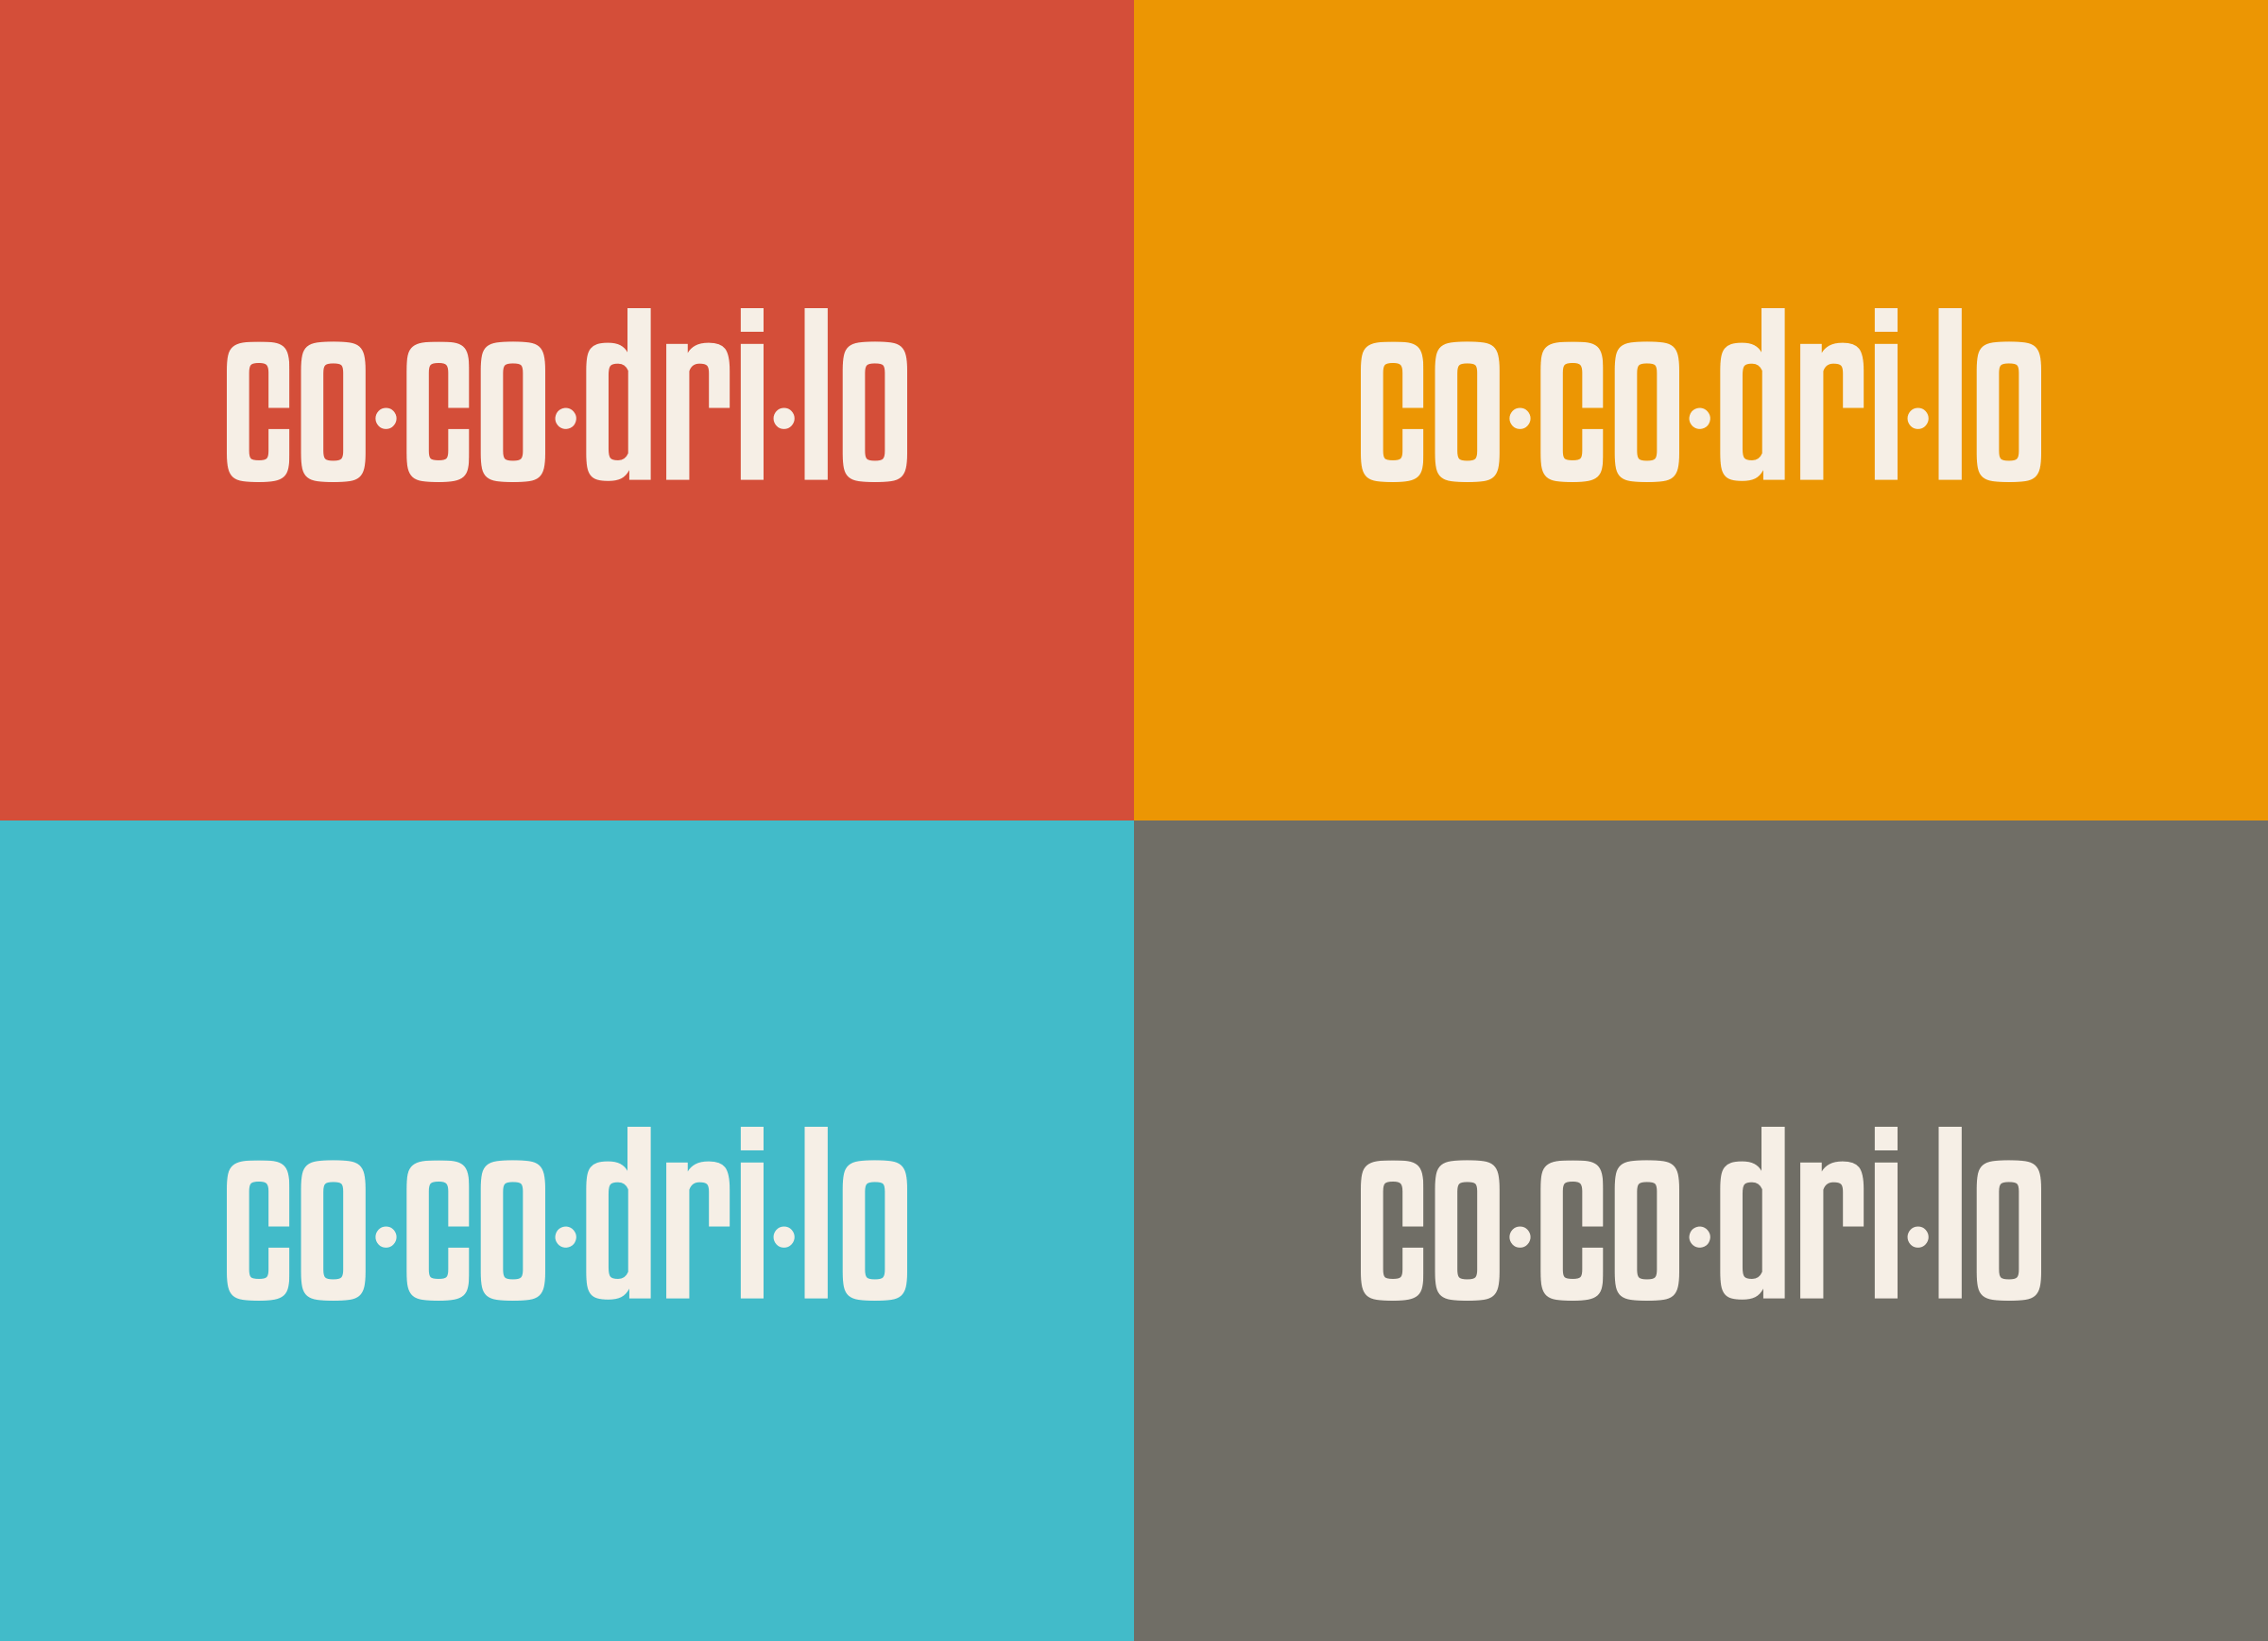 cocodrilo-logo-brand-colors